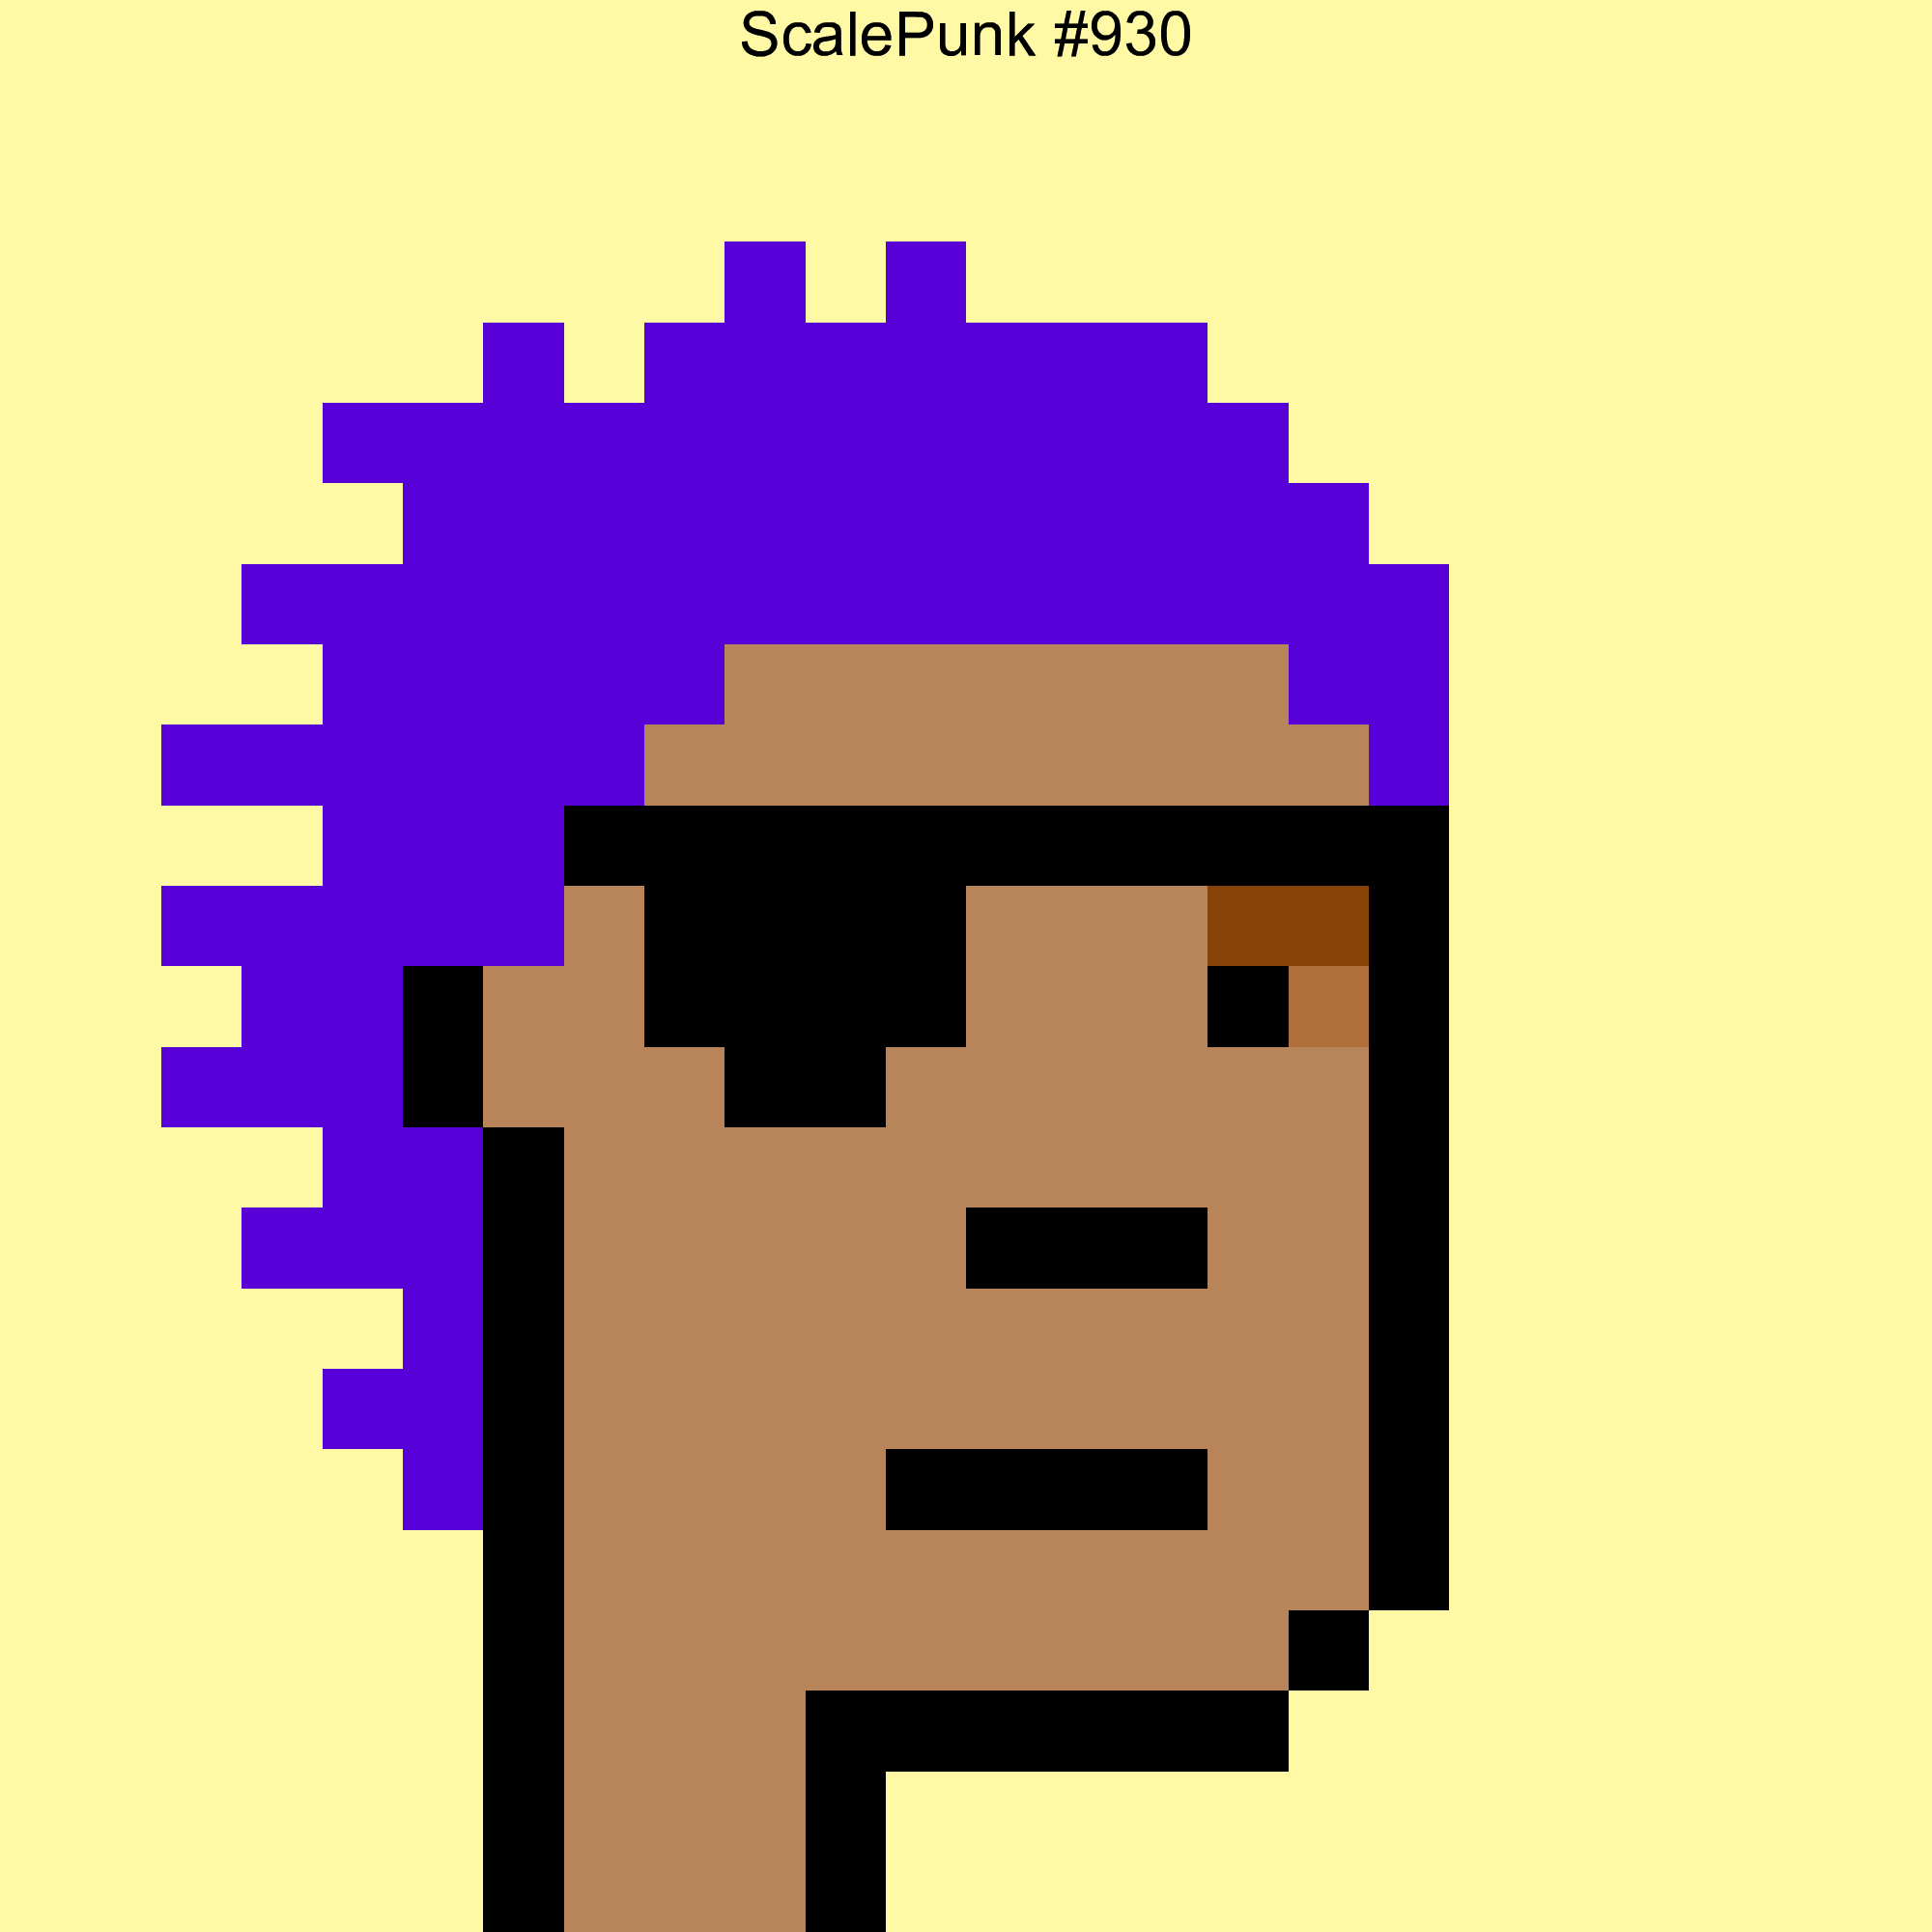 Punk 930